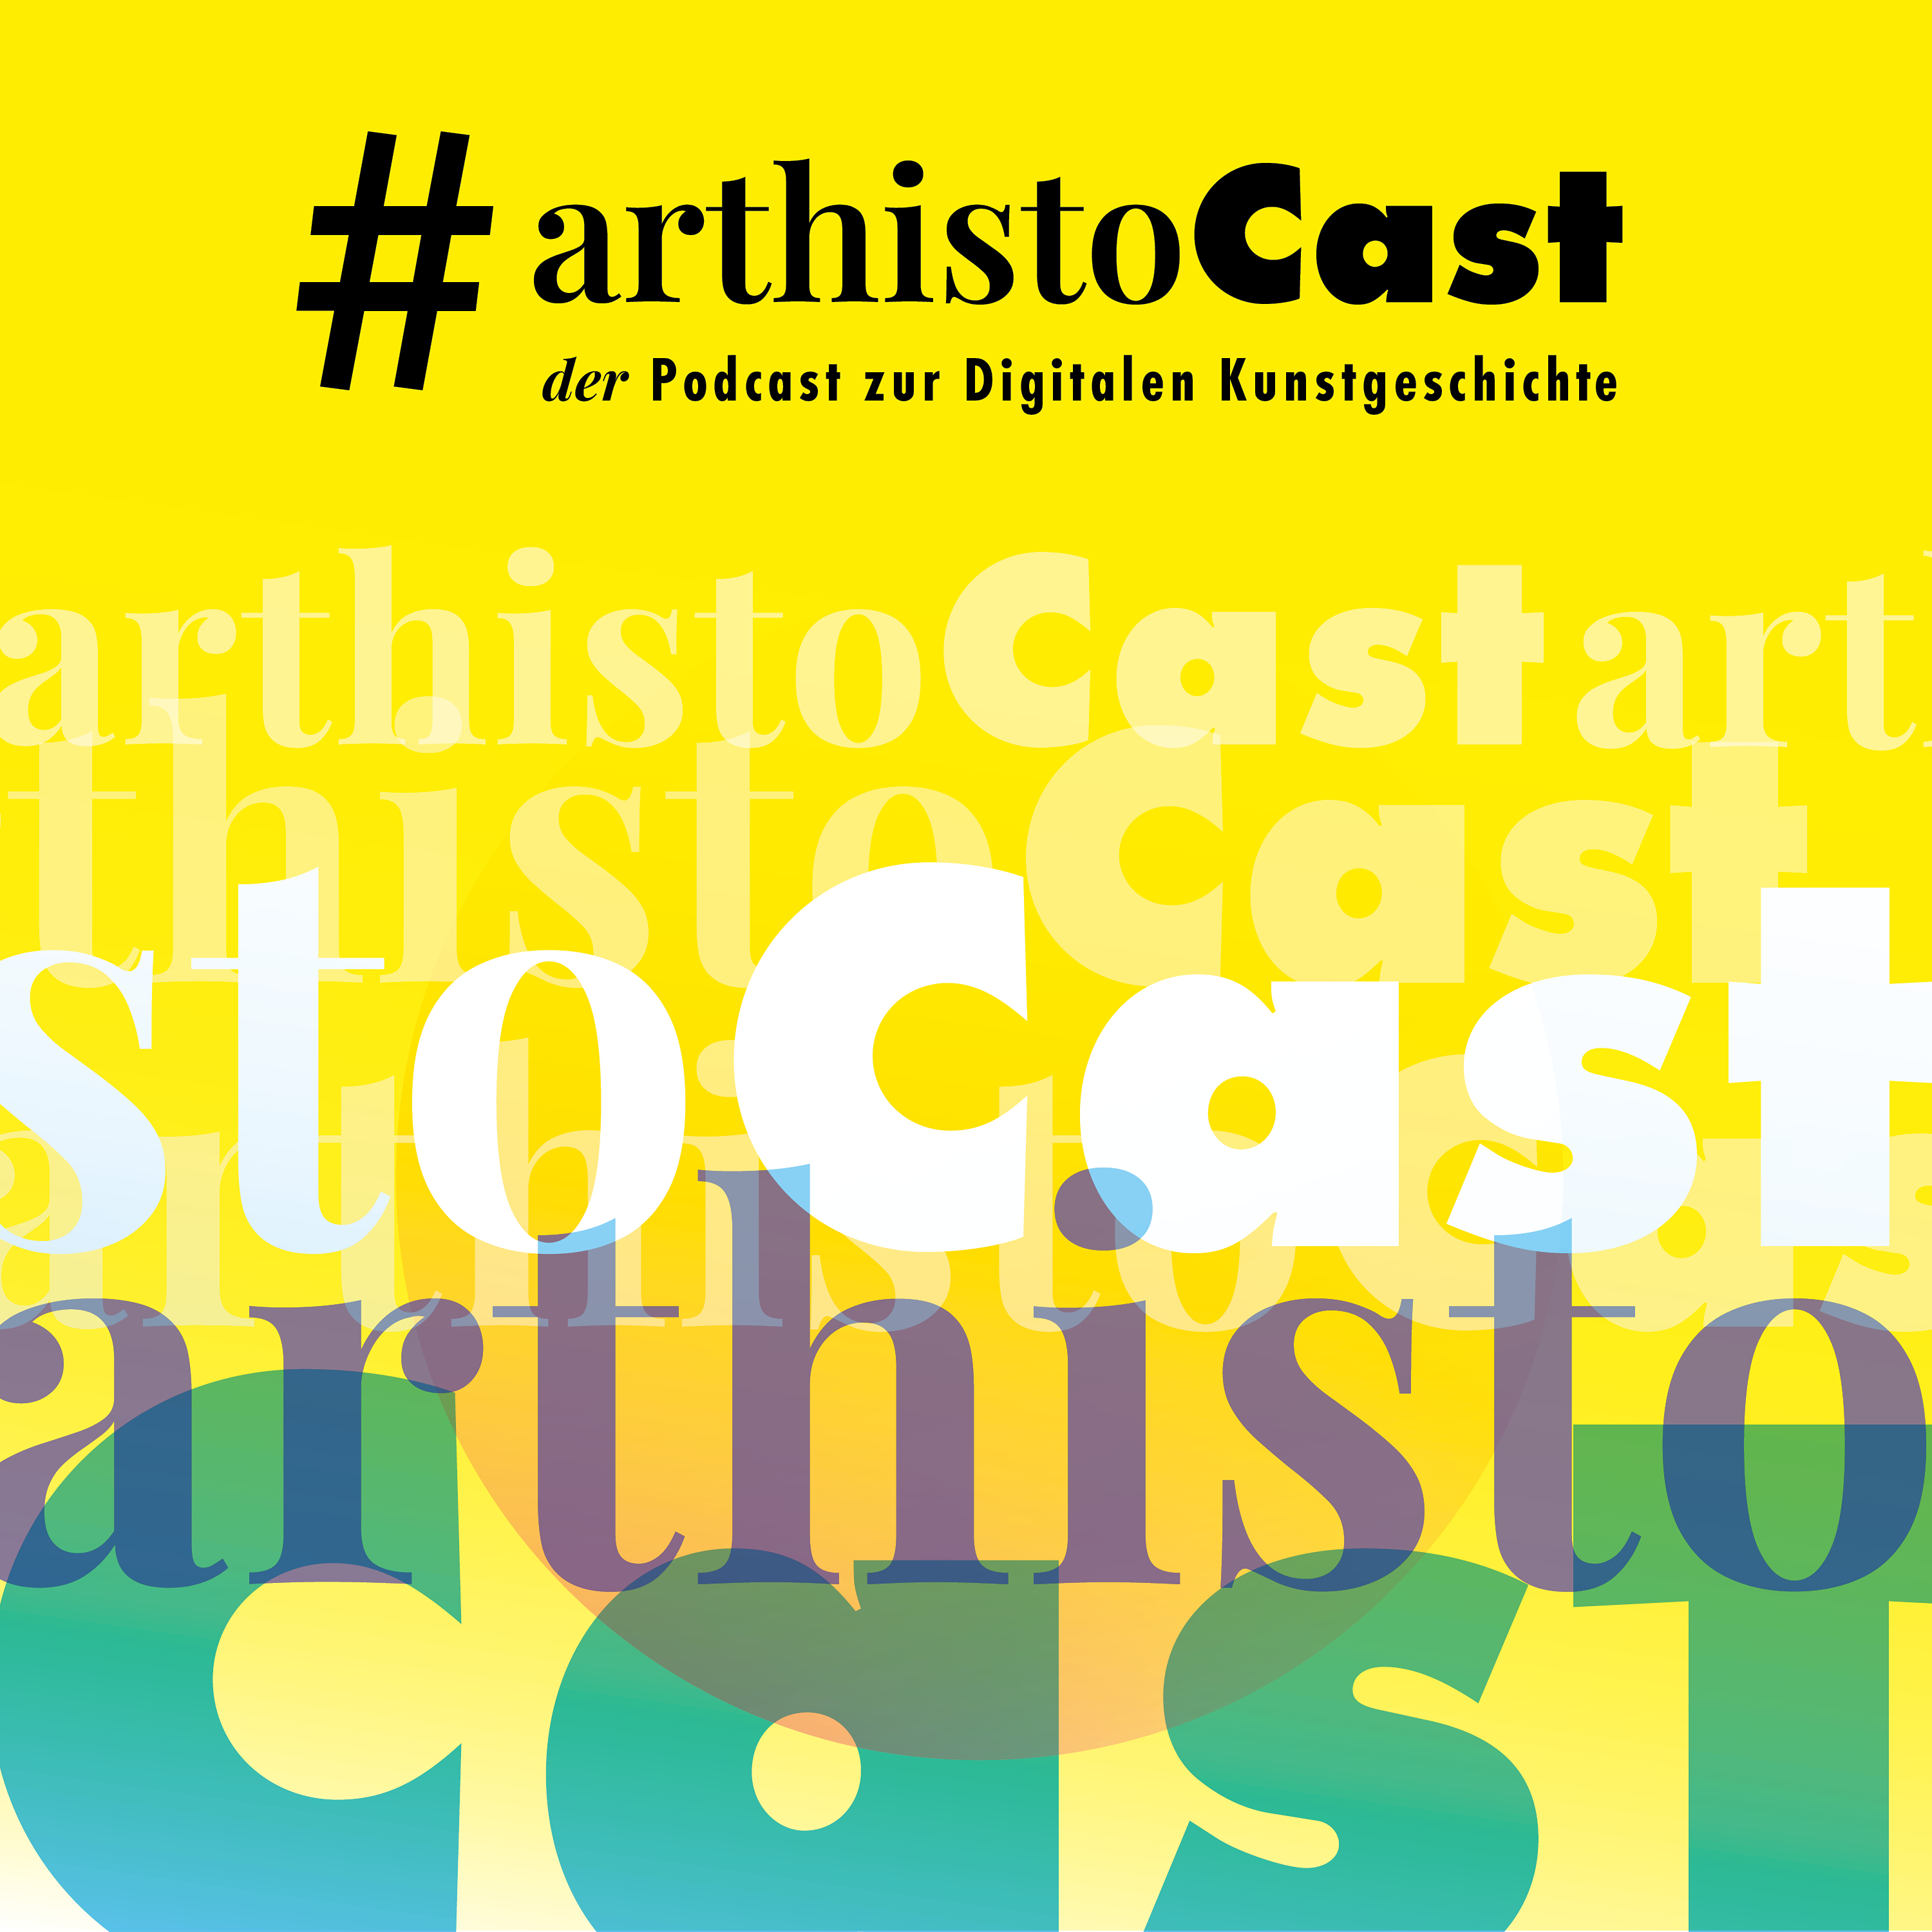 Folge 0: #arthistoCast der Name, Digitale Kunstgeschichte das Programm